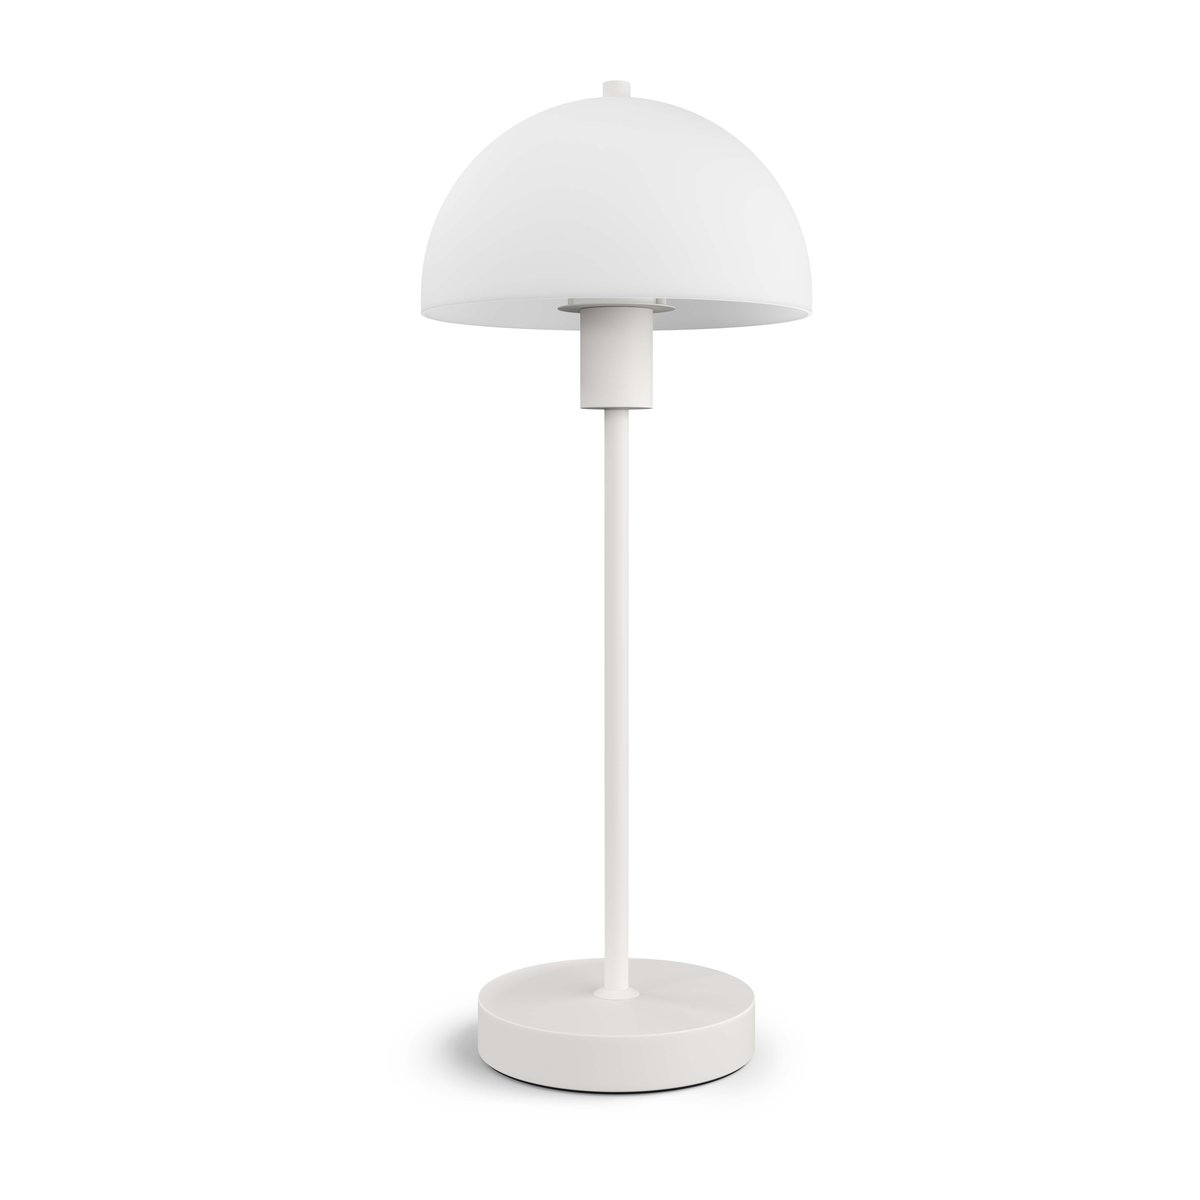 Herstal Vienda bordlampe 50 cm Hvid/Opalglas